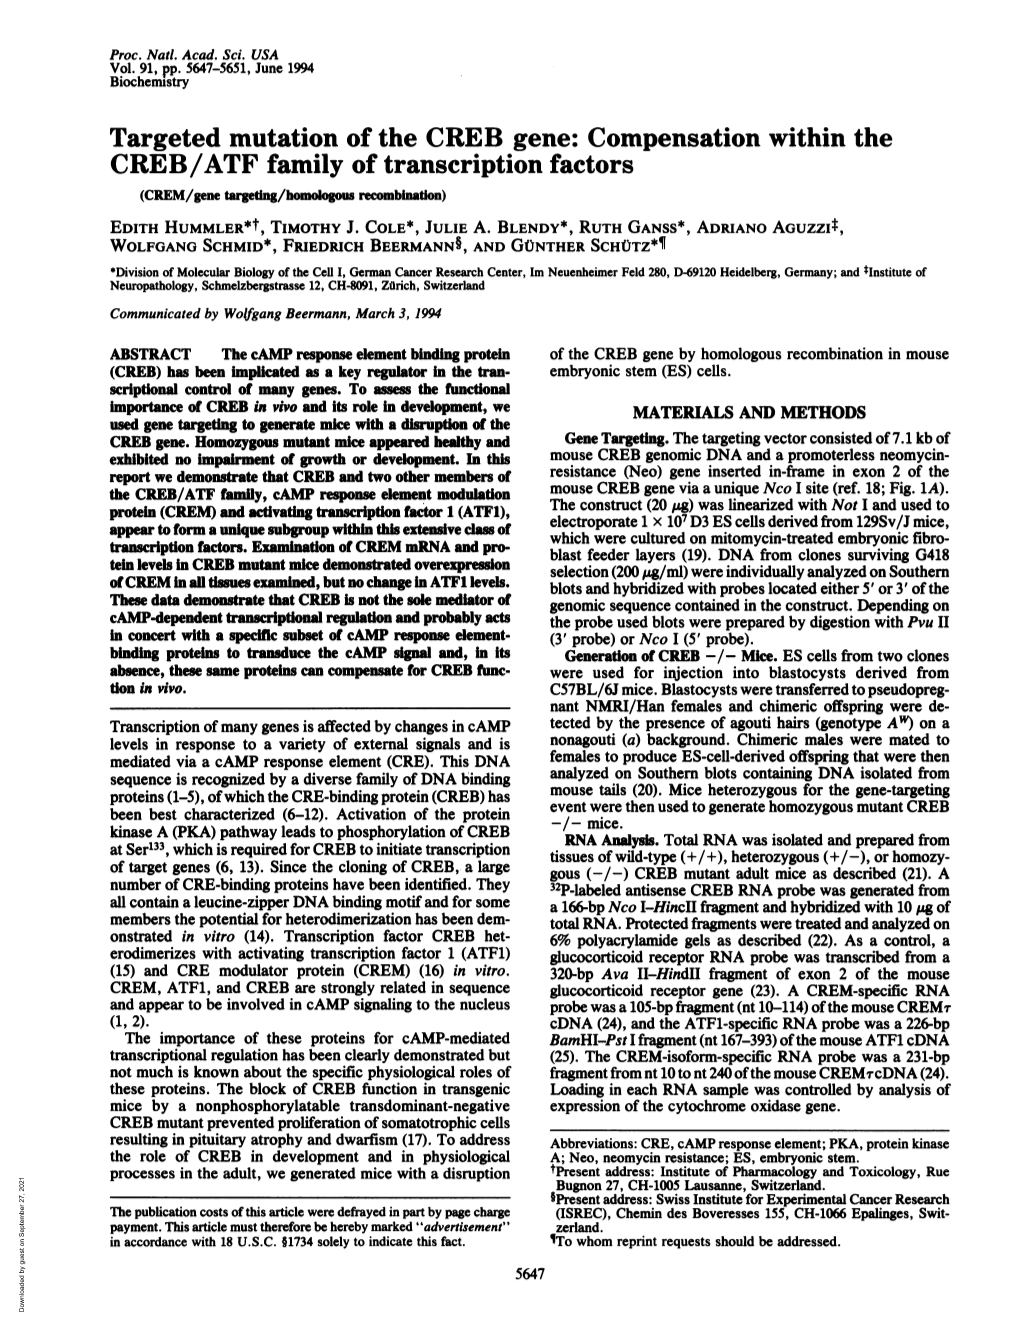 CREB/ATF Family of Transcription Factors (CREM/Gene Targetin/Homogous Recombination) EDITH HUMMLER*T, TIMOTHY J